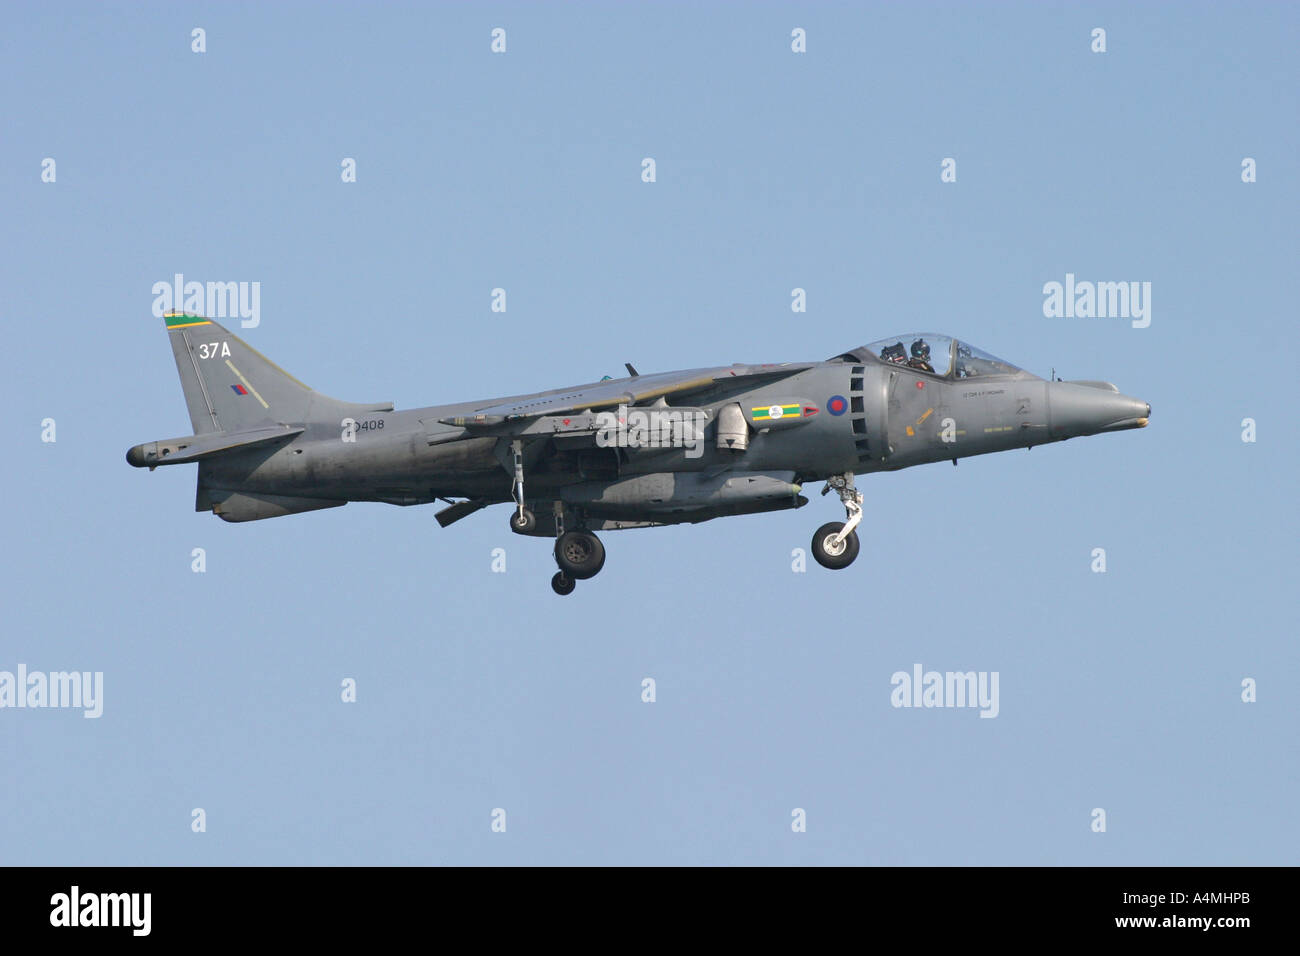 File:BAe Harrier GR7-9 (3735886540).jpg - Wikimedia Commons